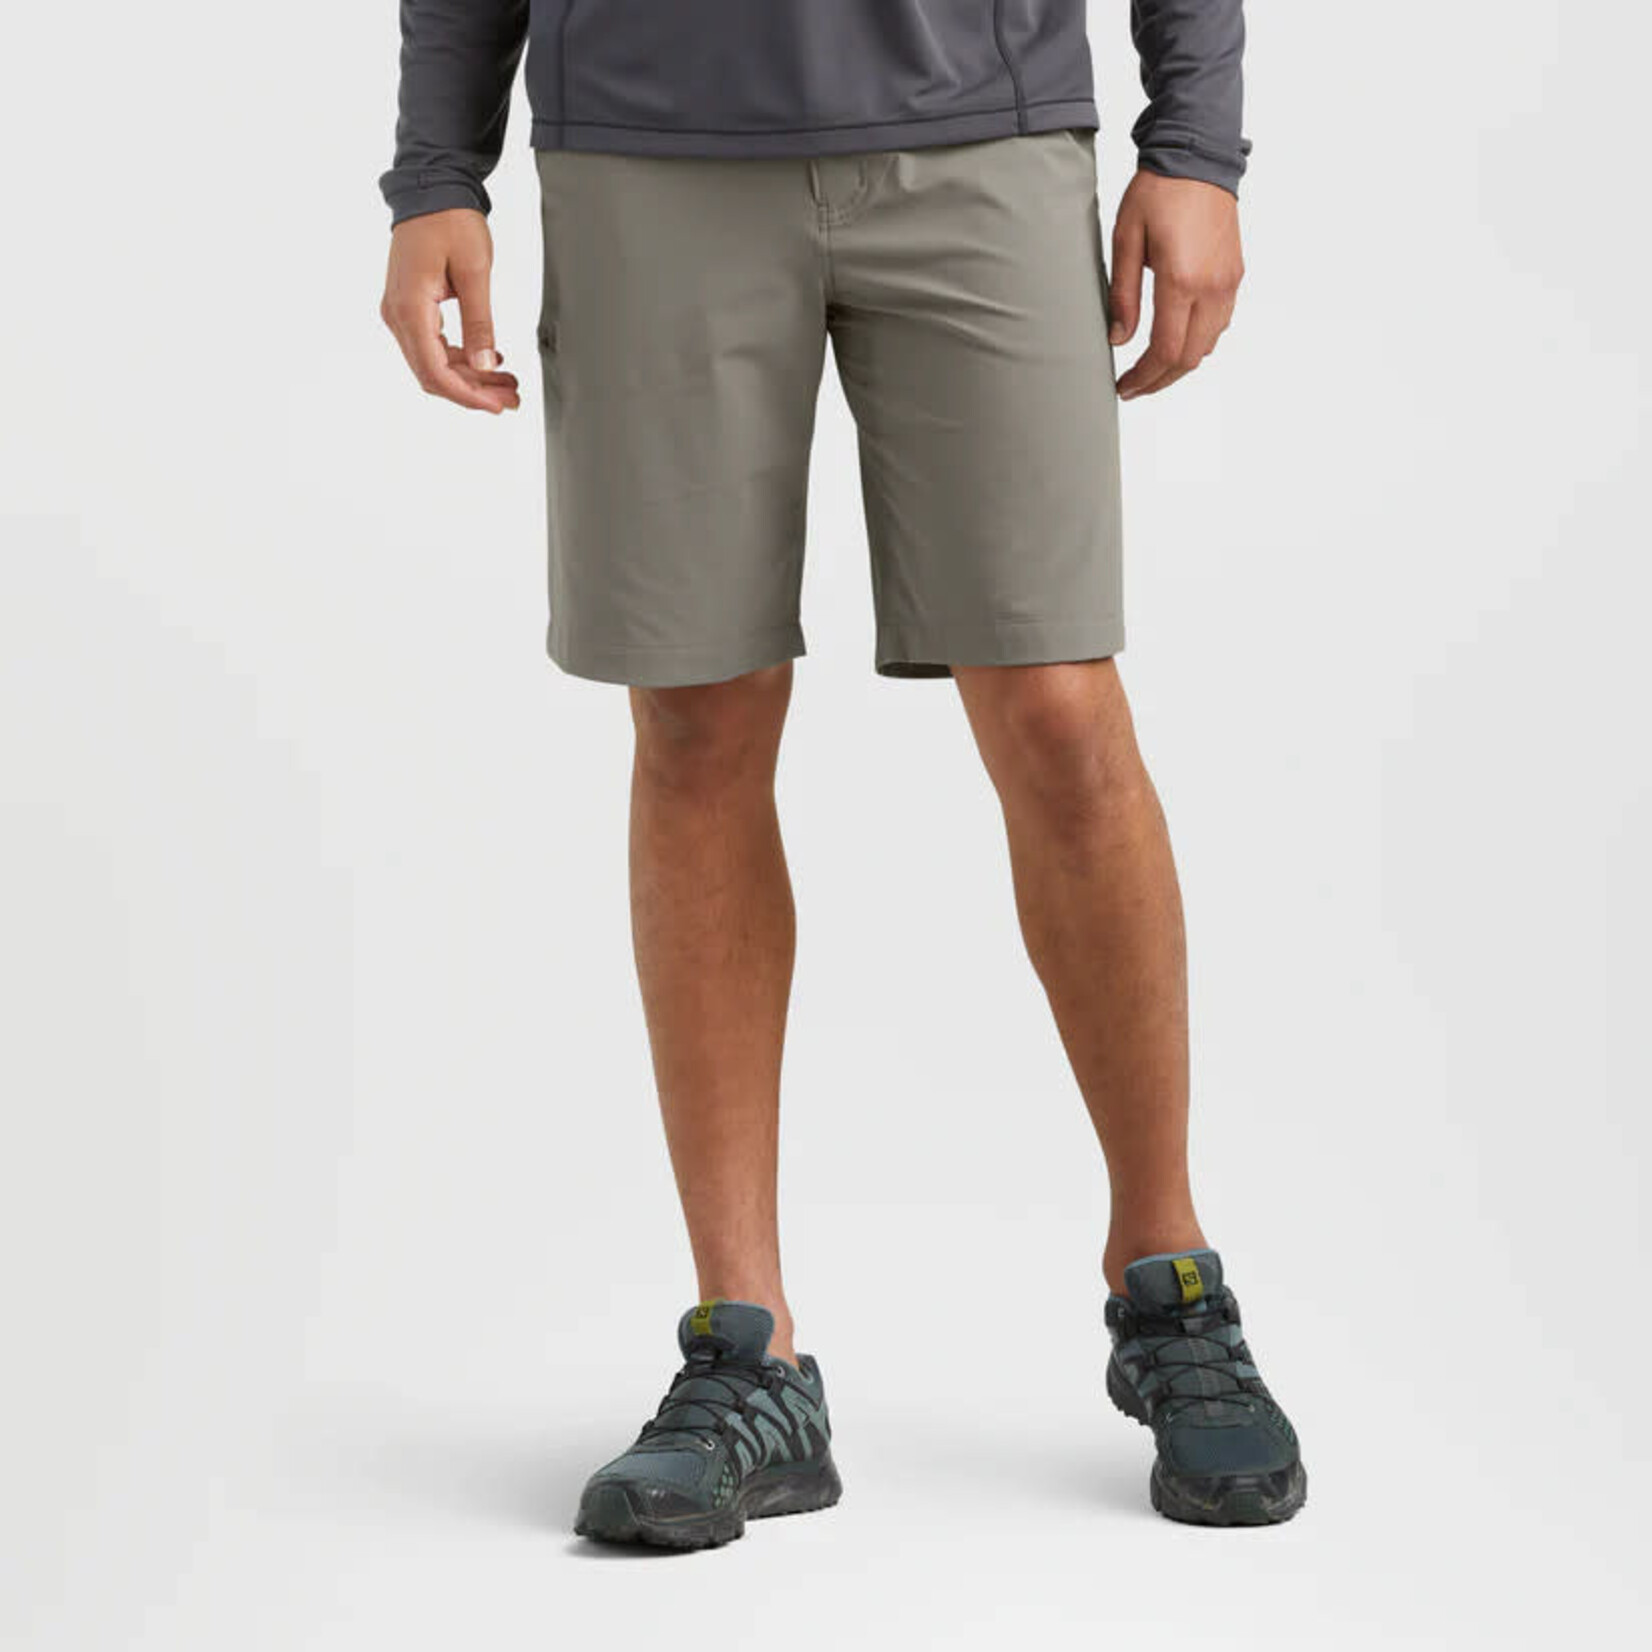 Outdoor Research Men's Ferrosi Shorts - 10" Inseam (homme)